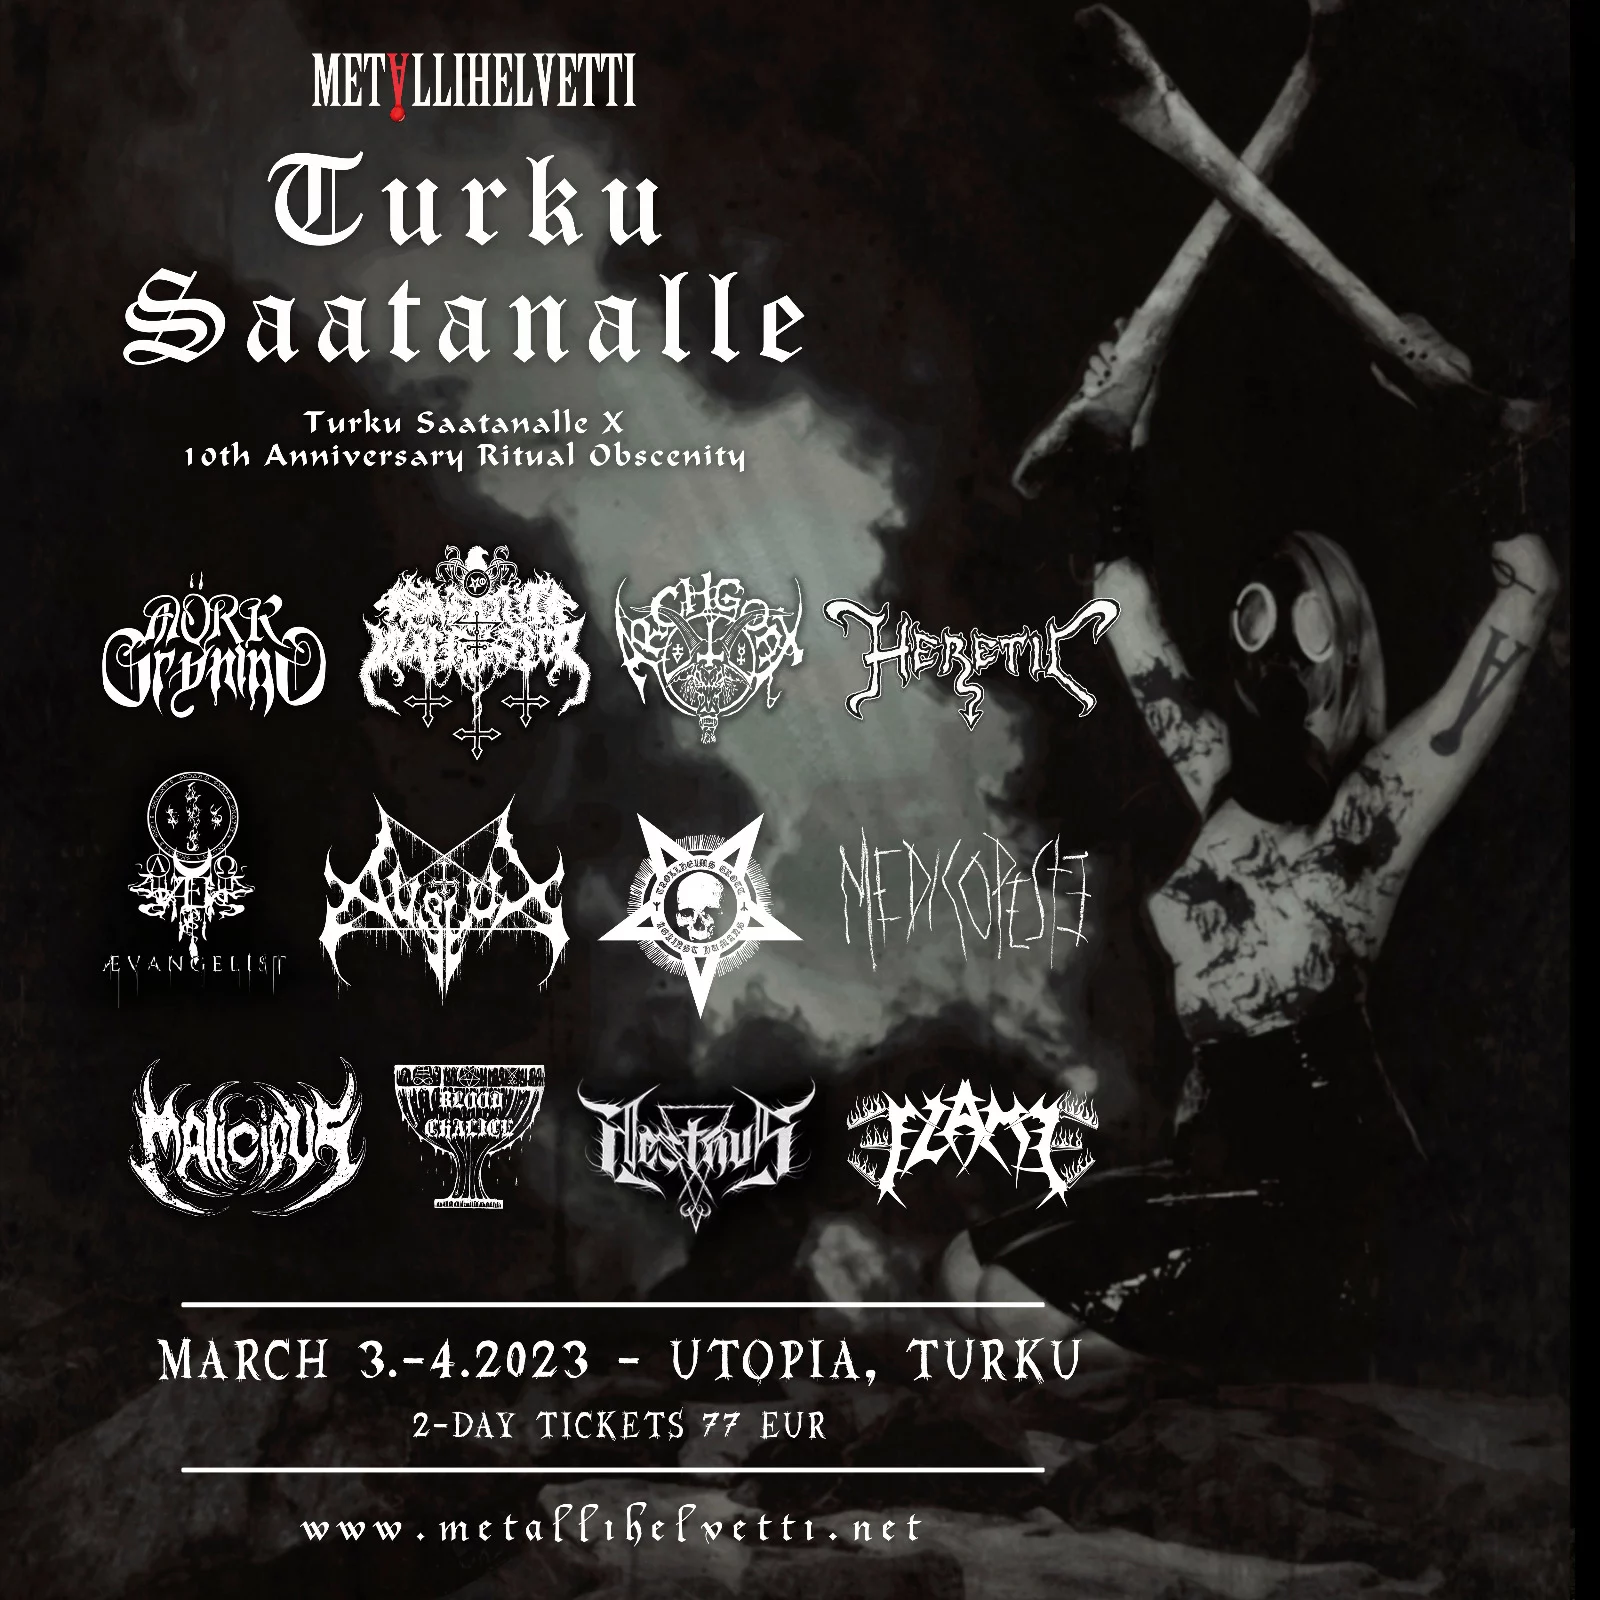 Turku Saatanalle X - 10th Anniversary Ritual Obscenity - Utopia Club